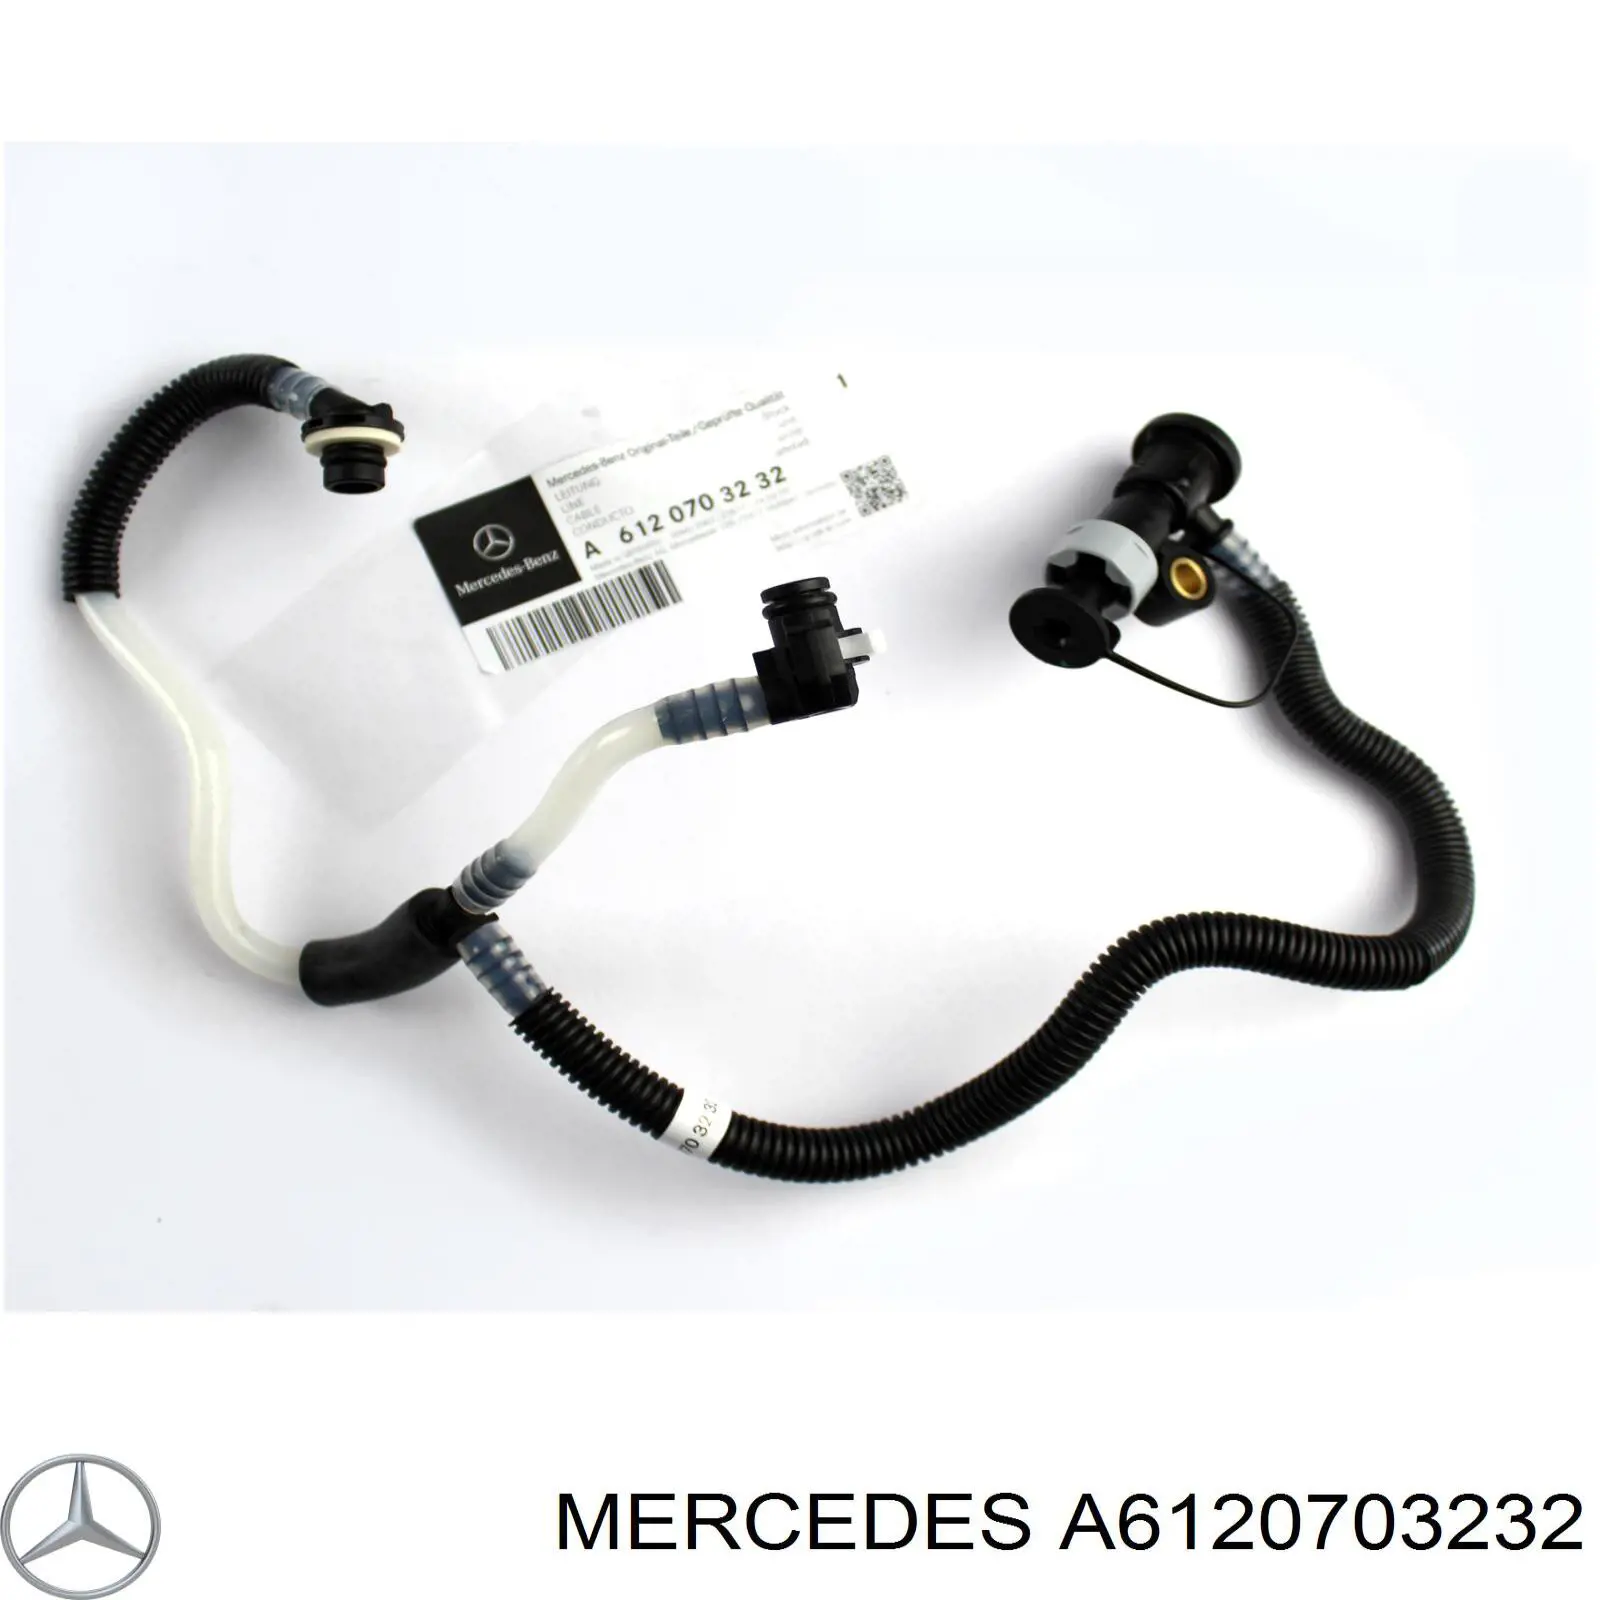 Трубка топливная от топливоподкачивающего насоса к ТНВД Mercedes A6120703232